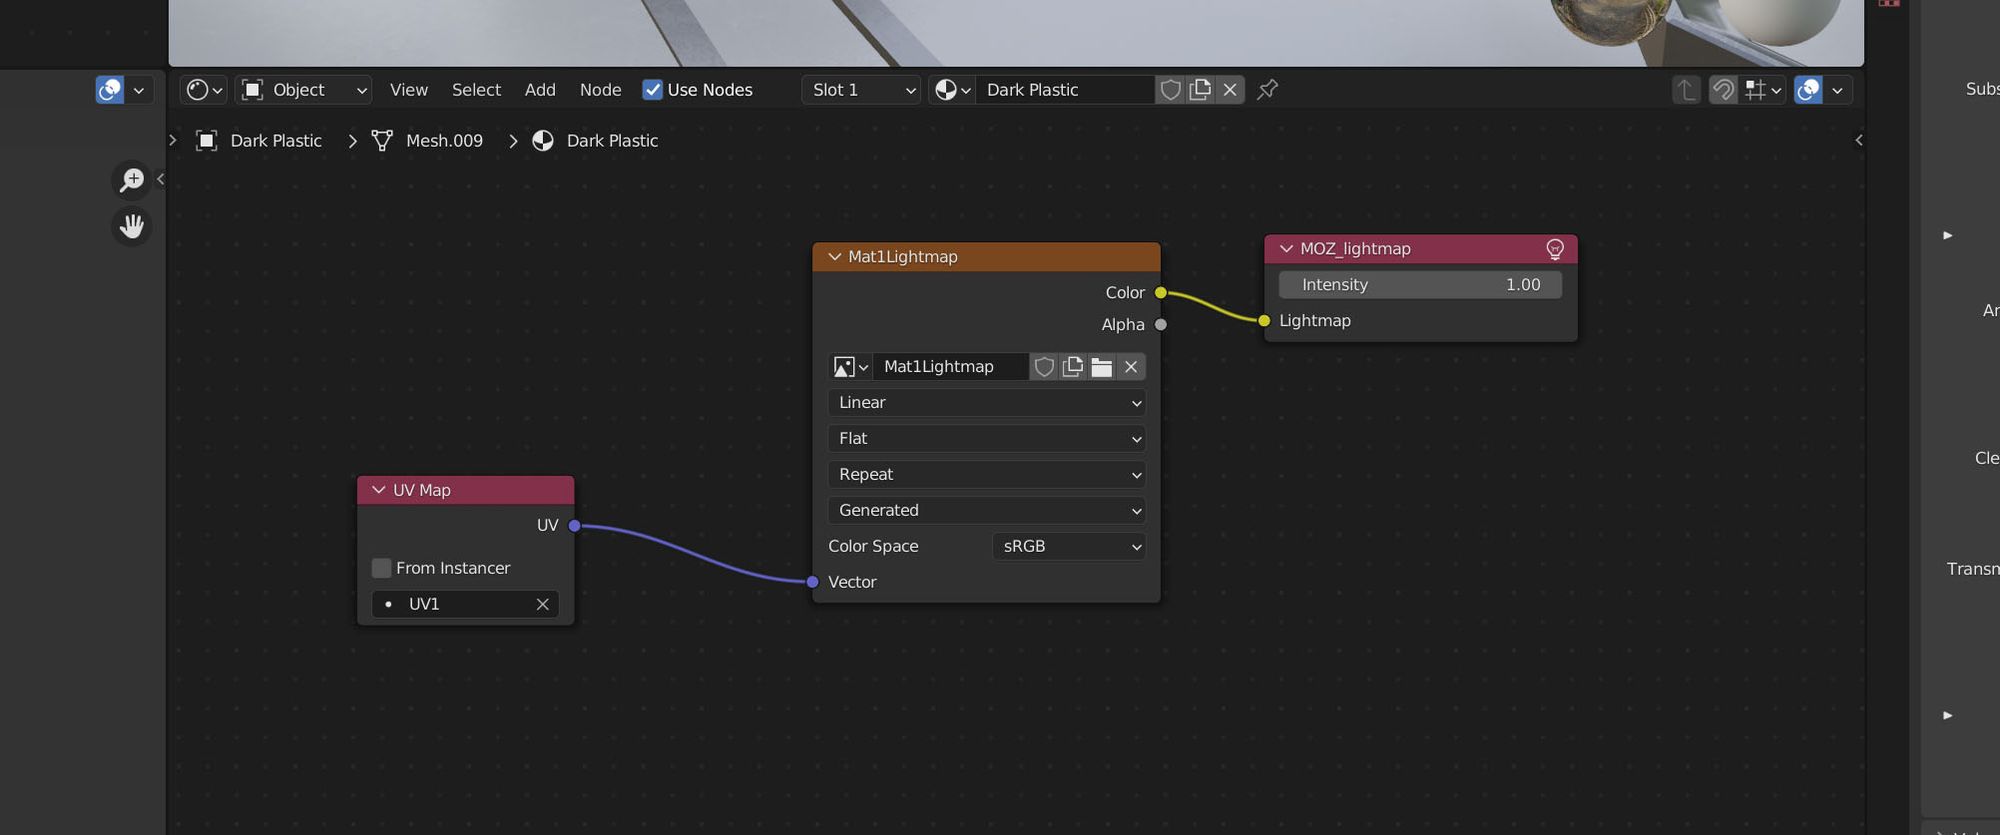 Blender's Shader Editor showing a UV Map node connected to an Image Texture node, then a MOZ_lightmap node.